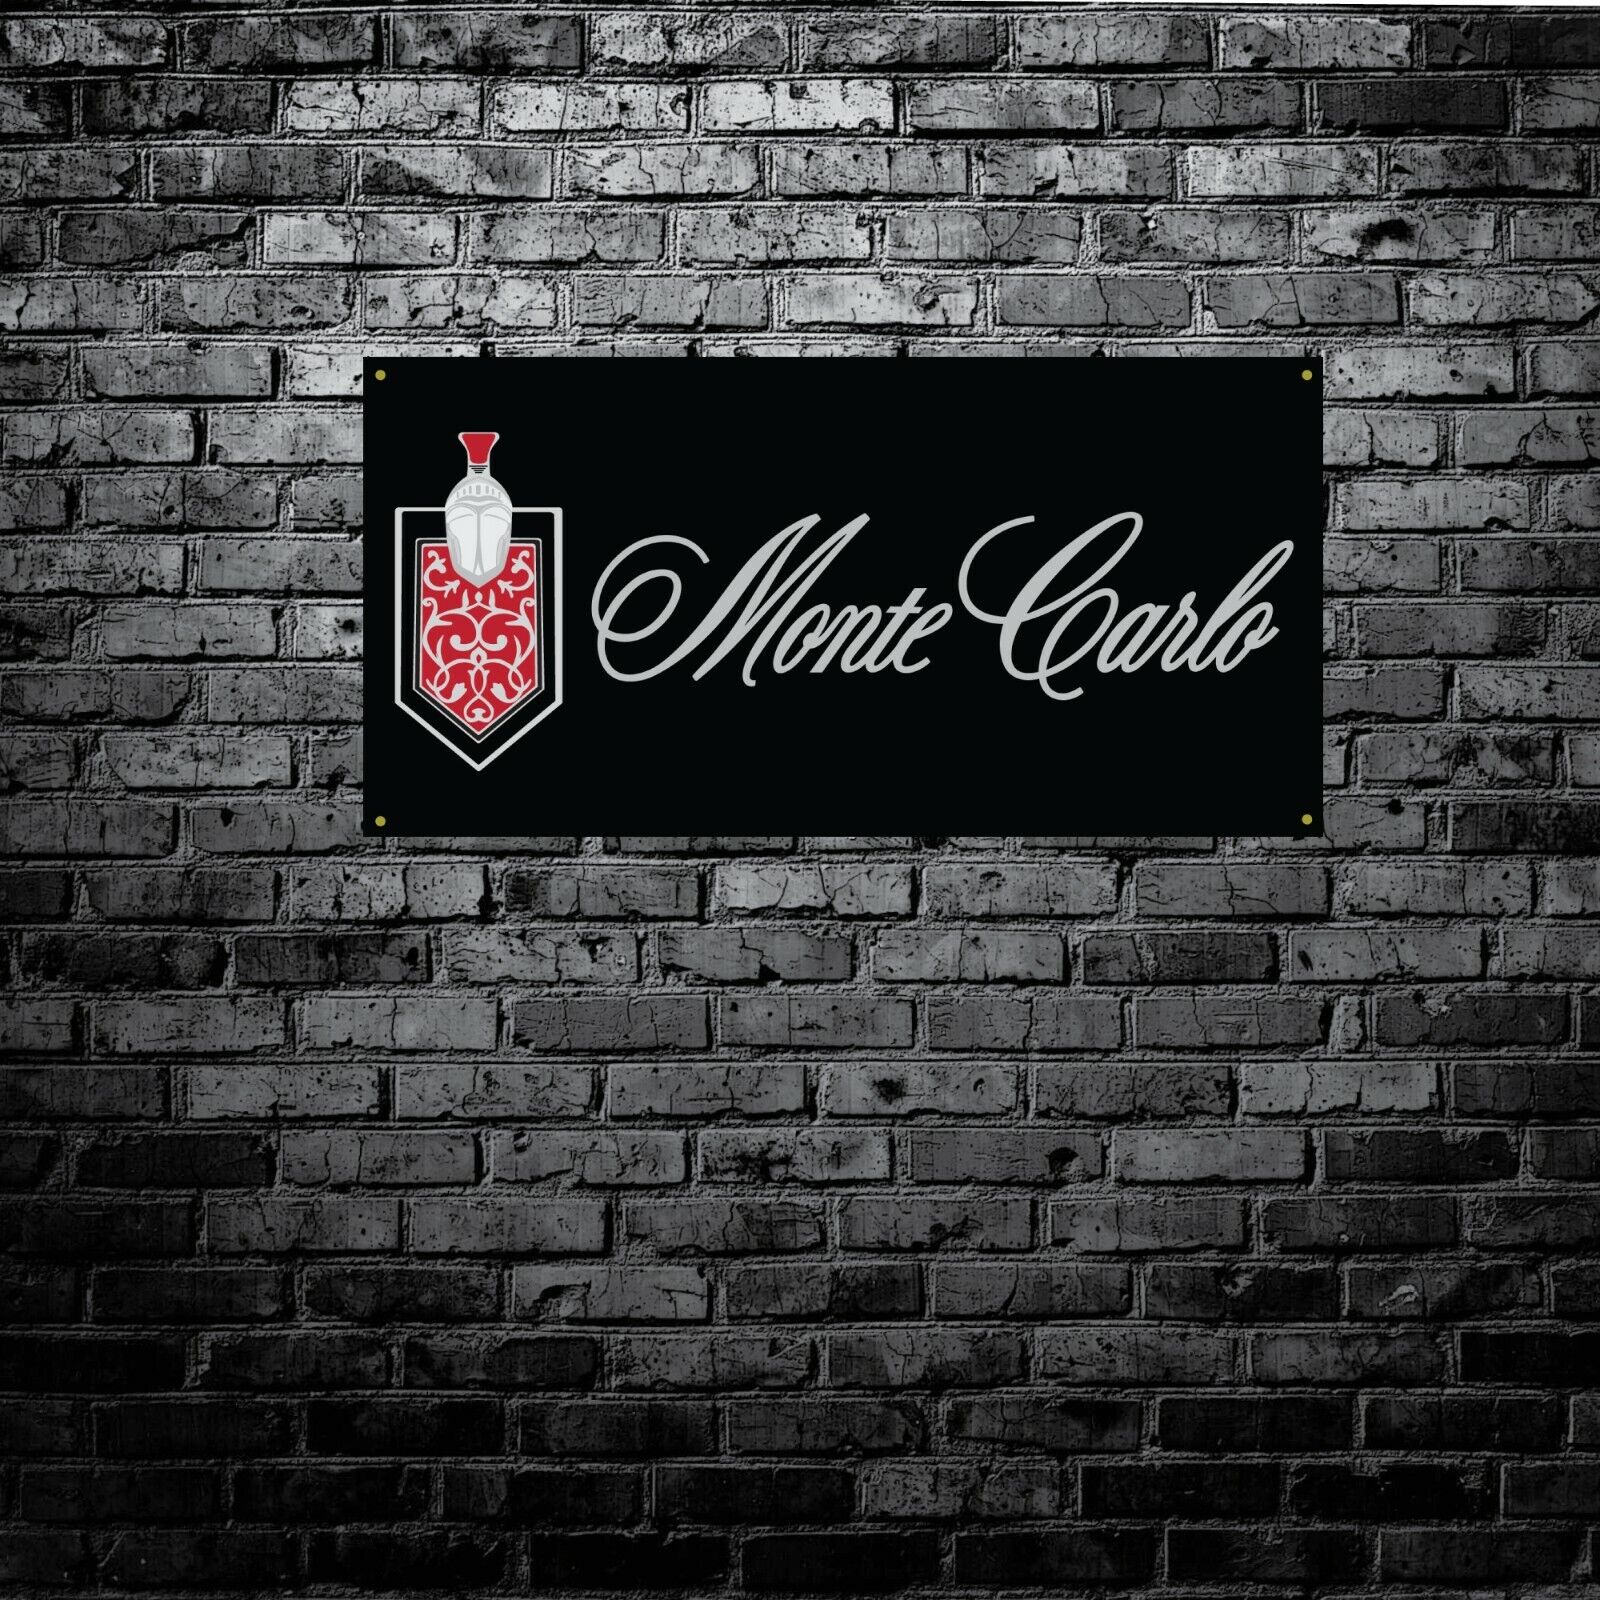 MONTE CARLO CREST logo Classic banner Garage Workshop SHIPS FREE